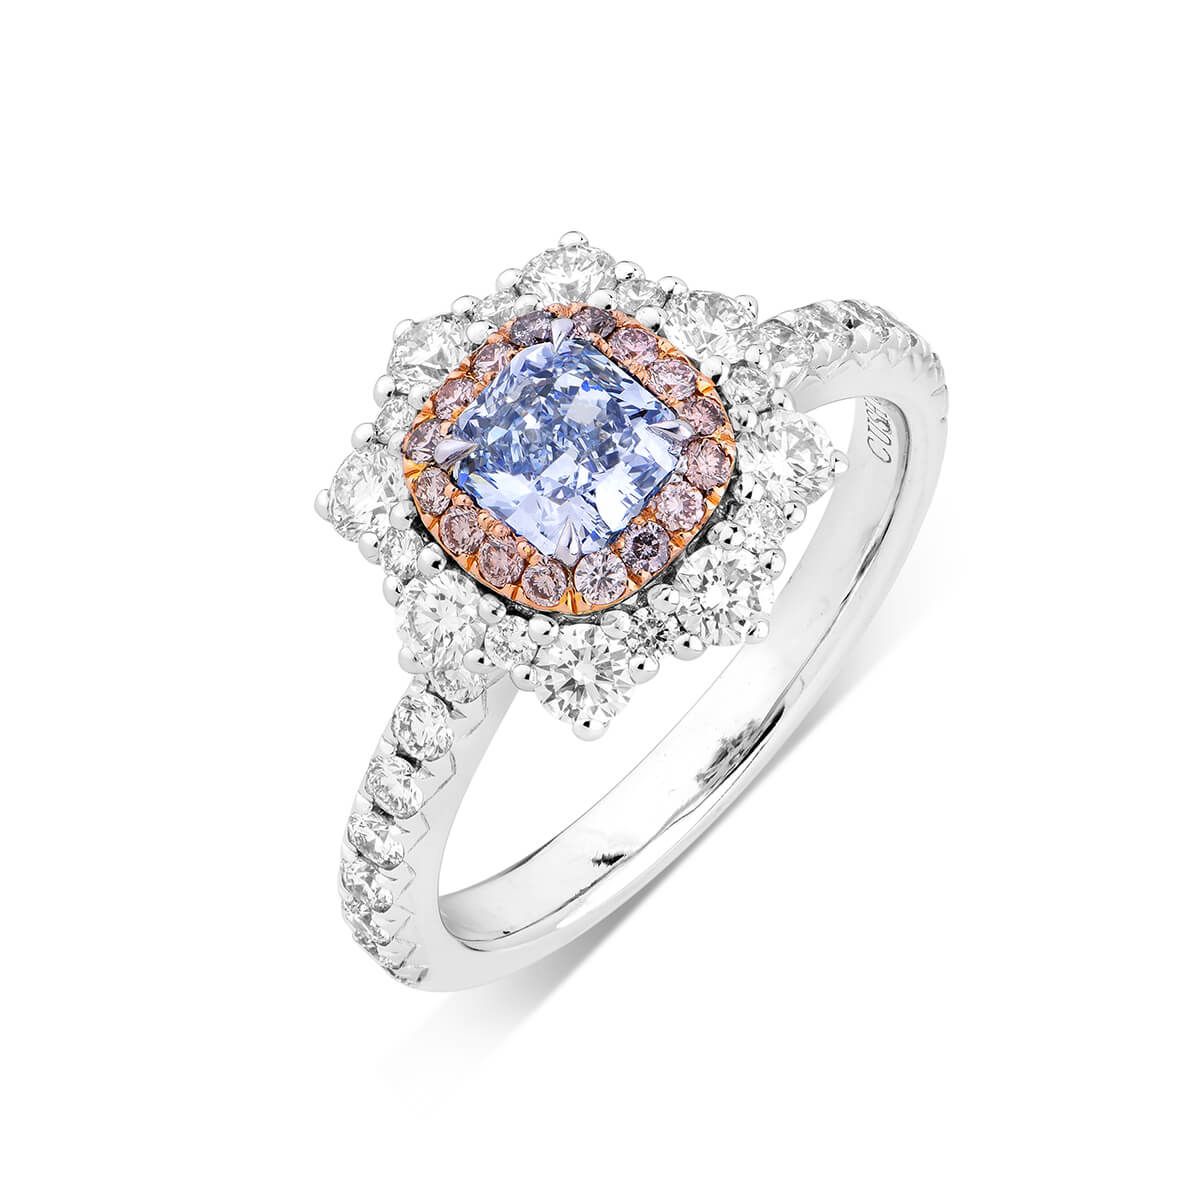 Fancy Blue Diamond Ring, 1.02 Carat, Radiant shape, GIA Certified, 2155836668